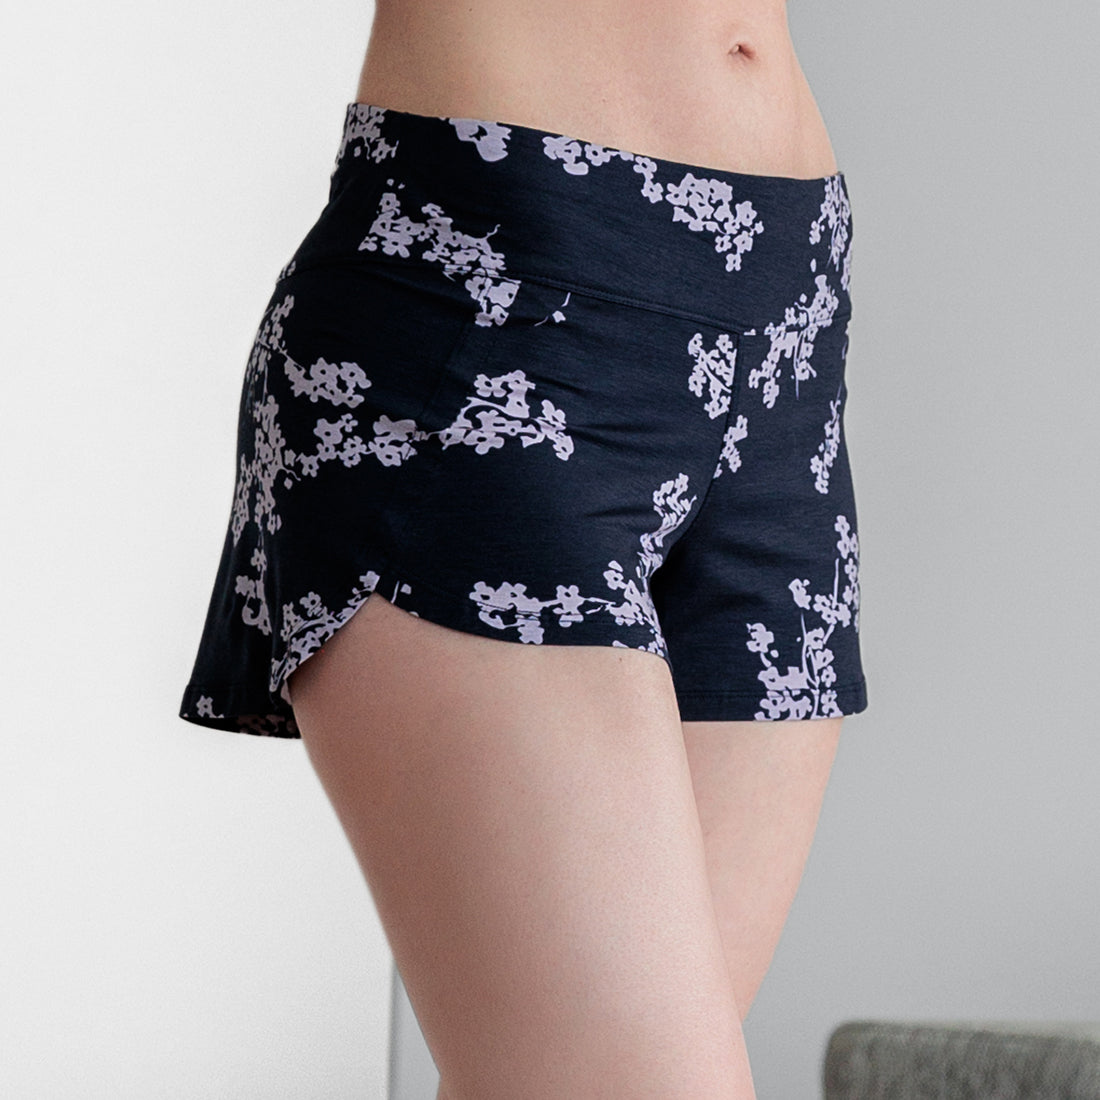 Short pajama set women || Cherry blossom